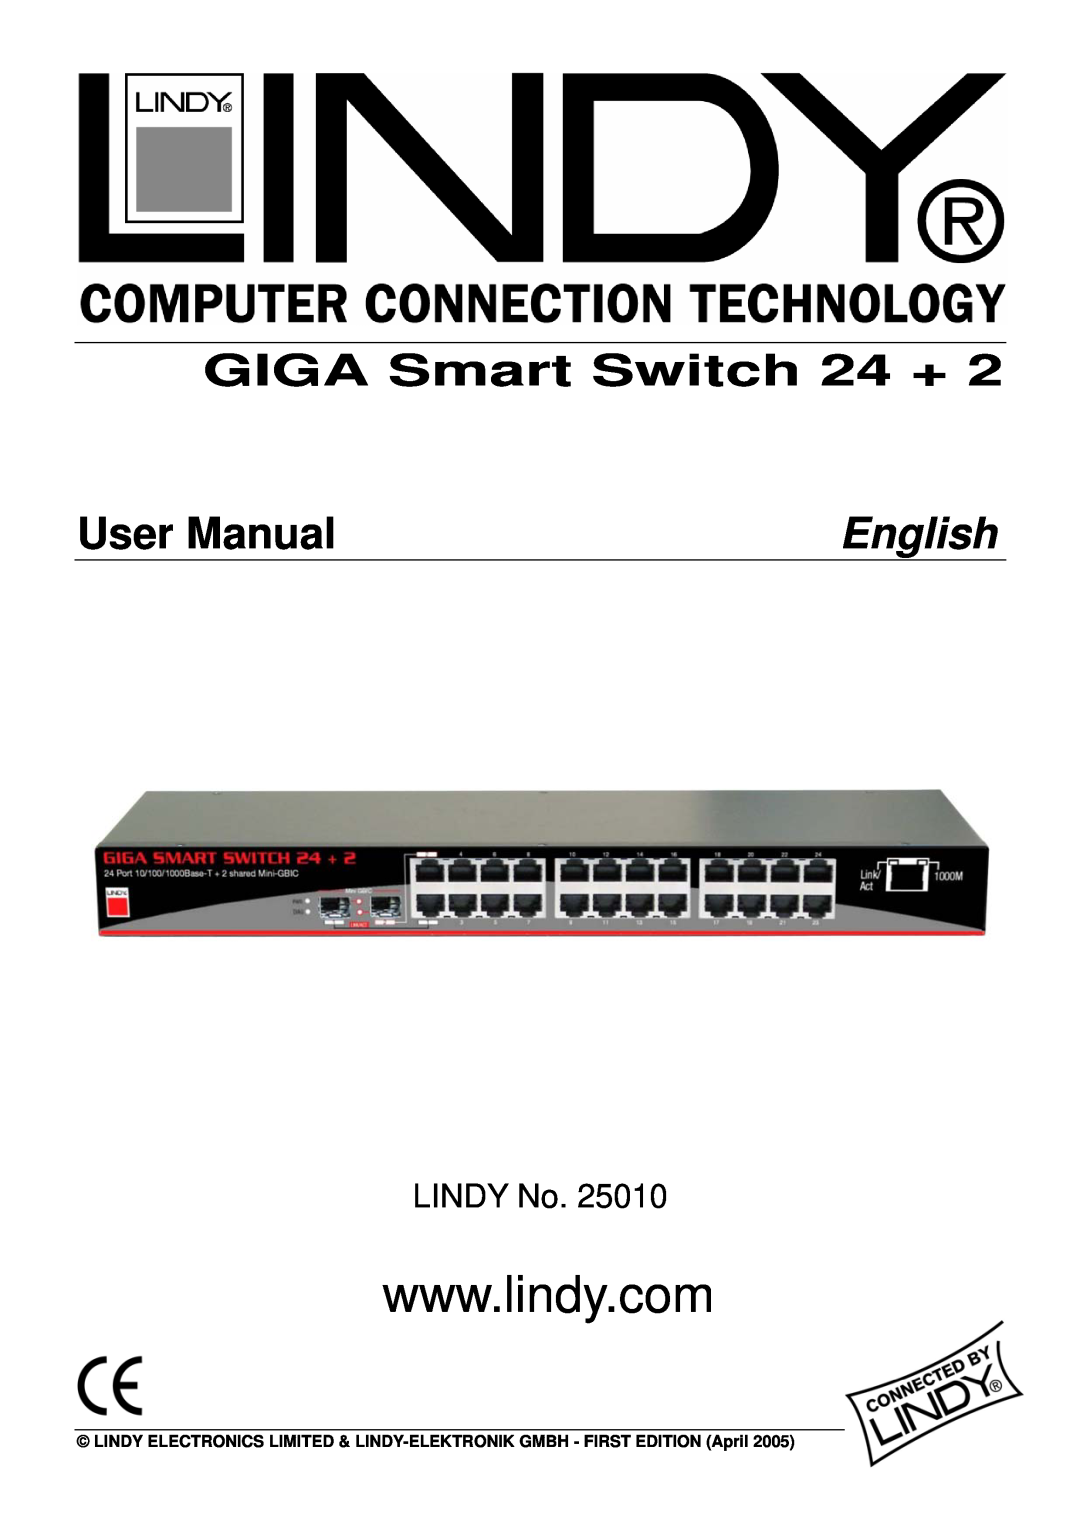 Lindy 25010 user manual GIGA Smart Switch 24 +, User Manual, English, LINDY No 